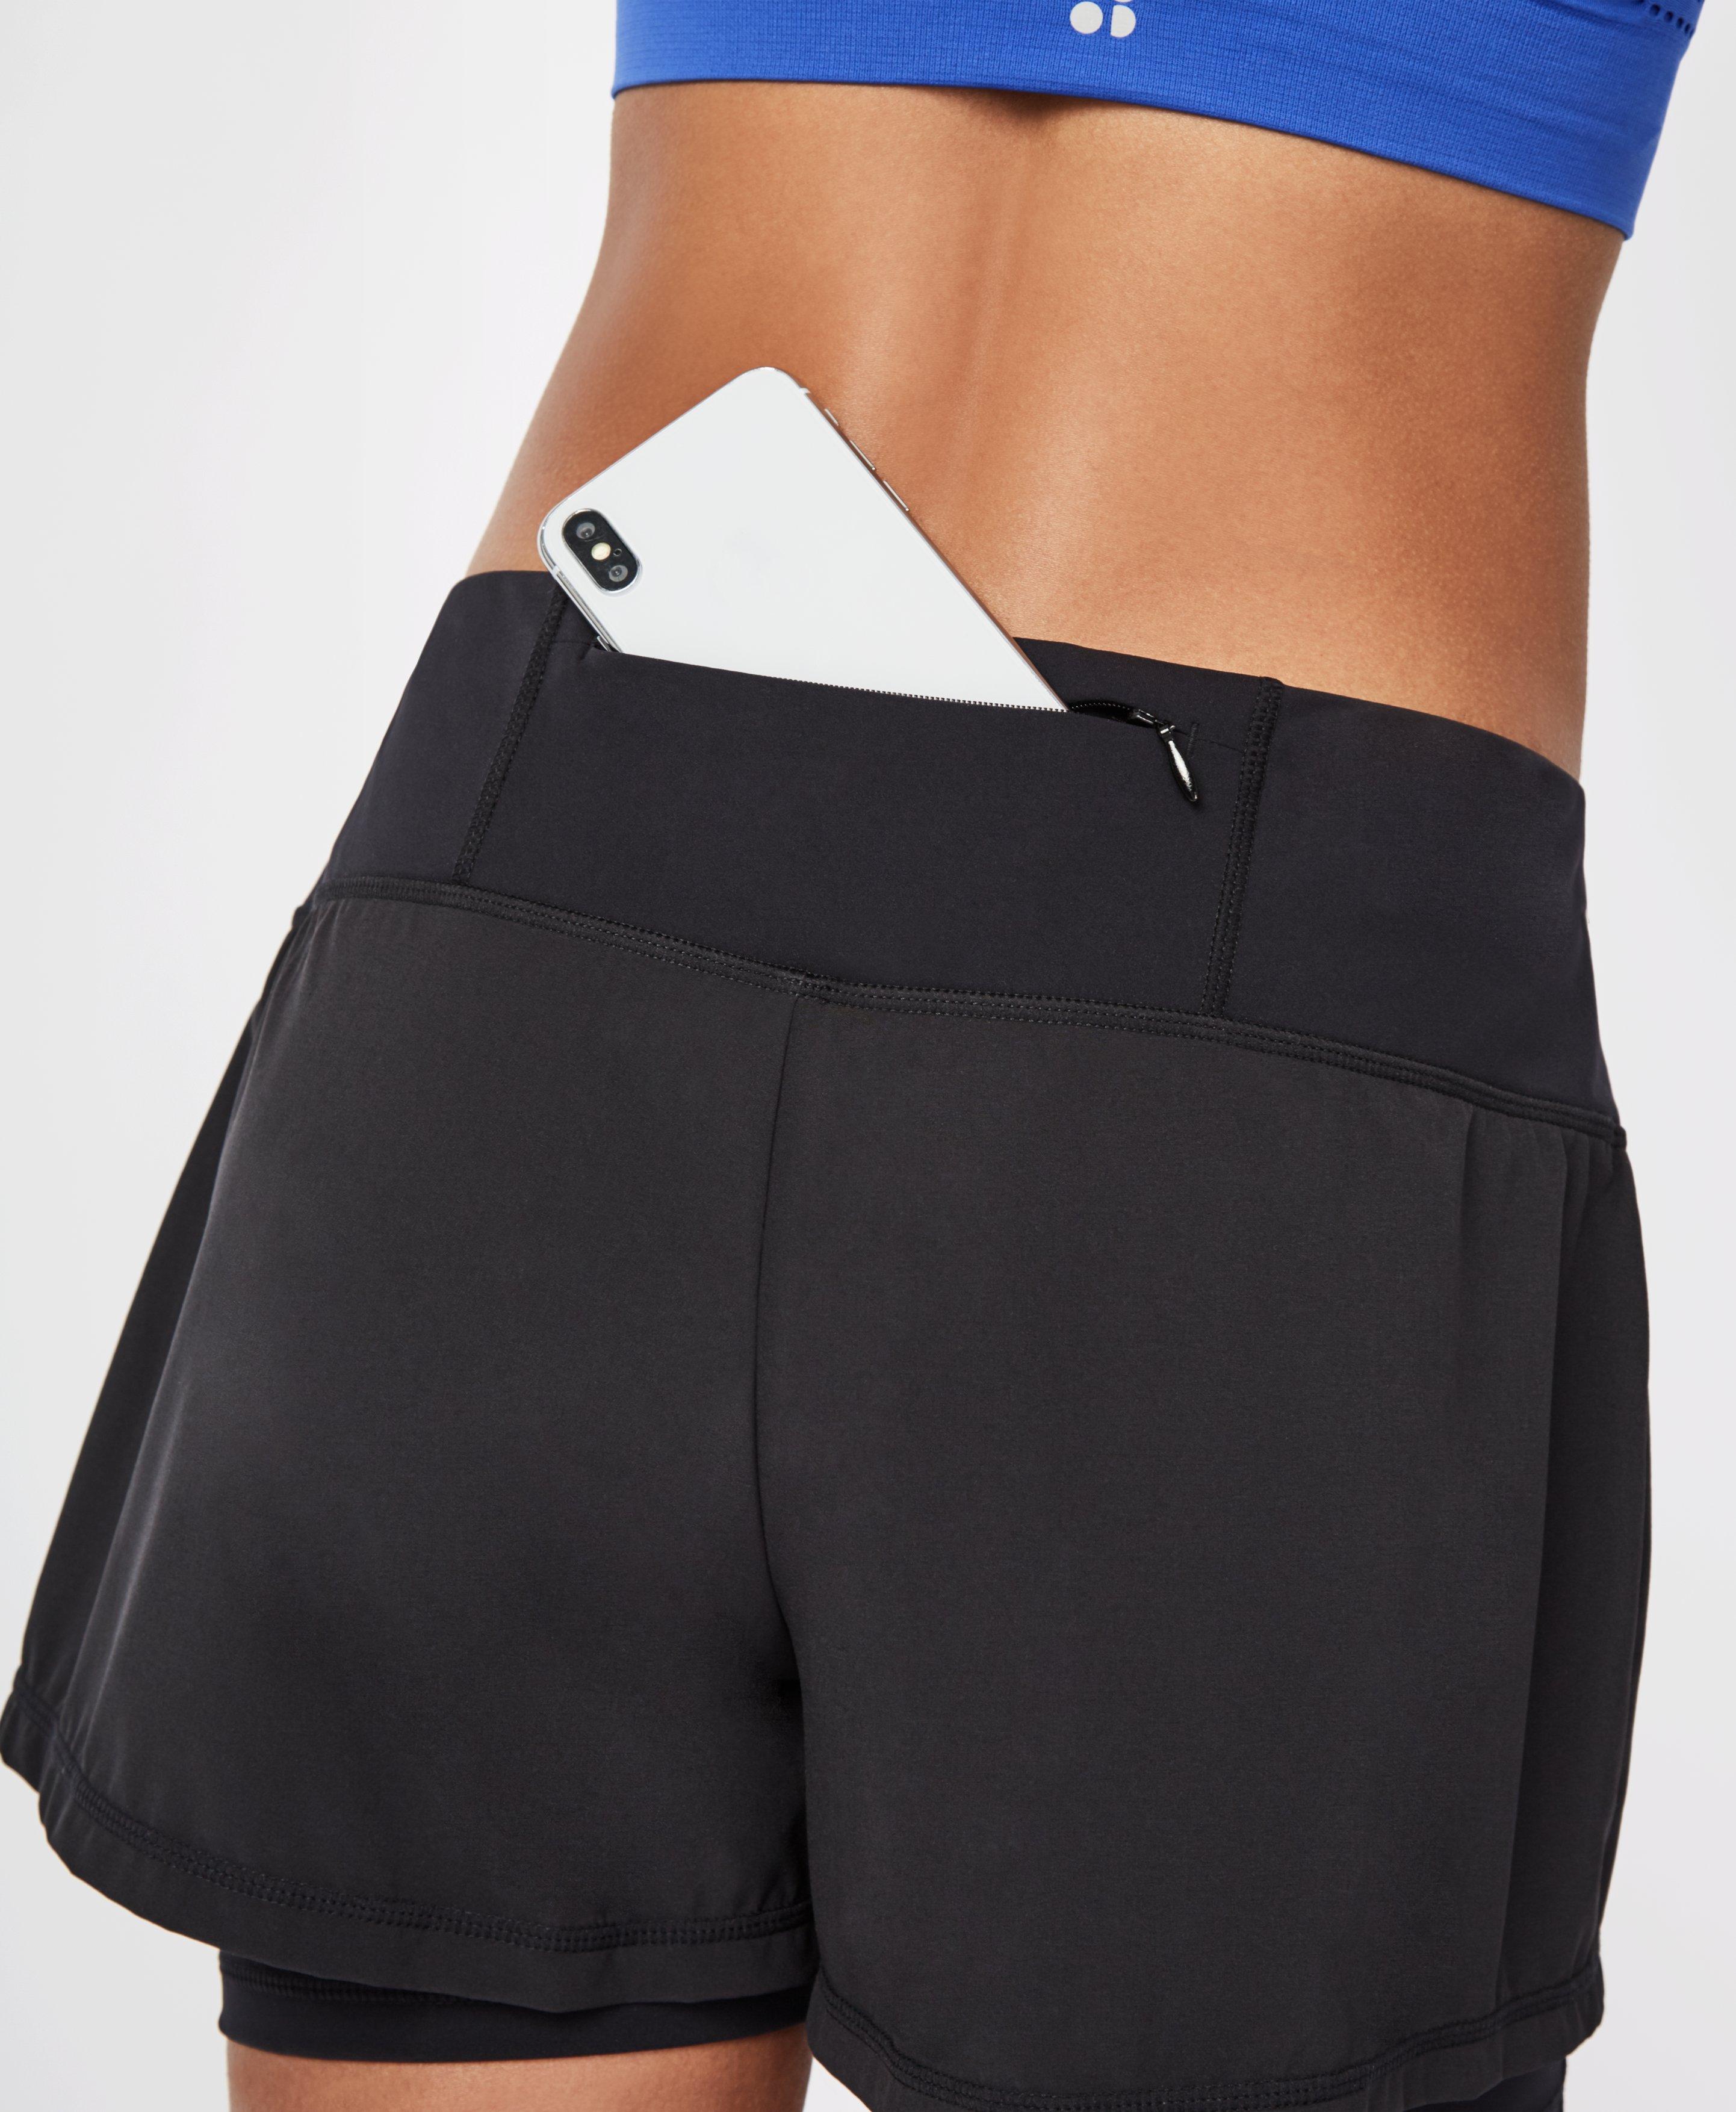 under shorts with phone pocket